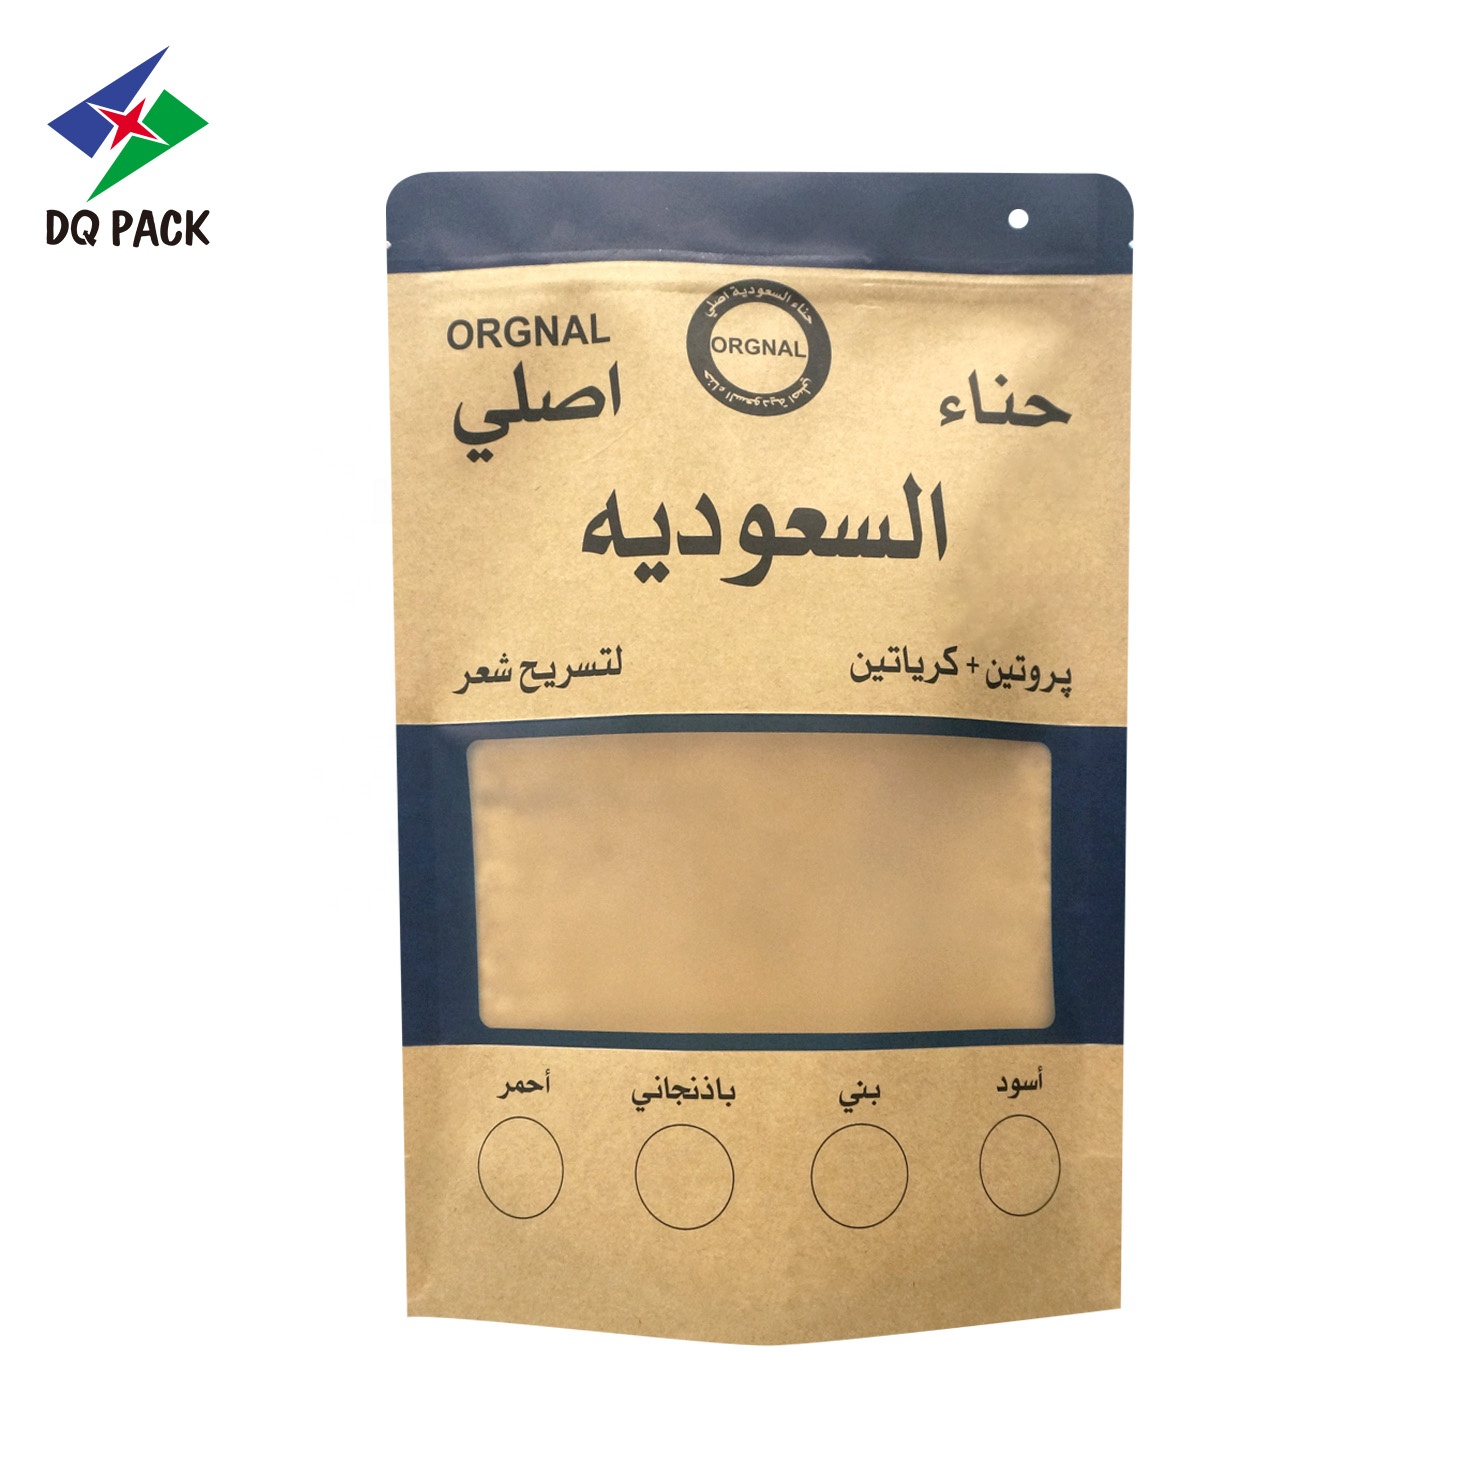 DQ PACK High Quality Kraft Paper Bags Custom Print Zipper Bag 500g Packaging Bag